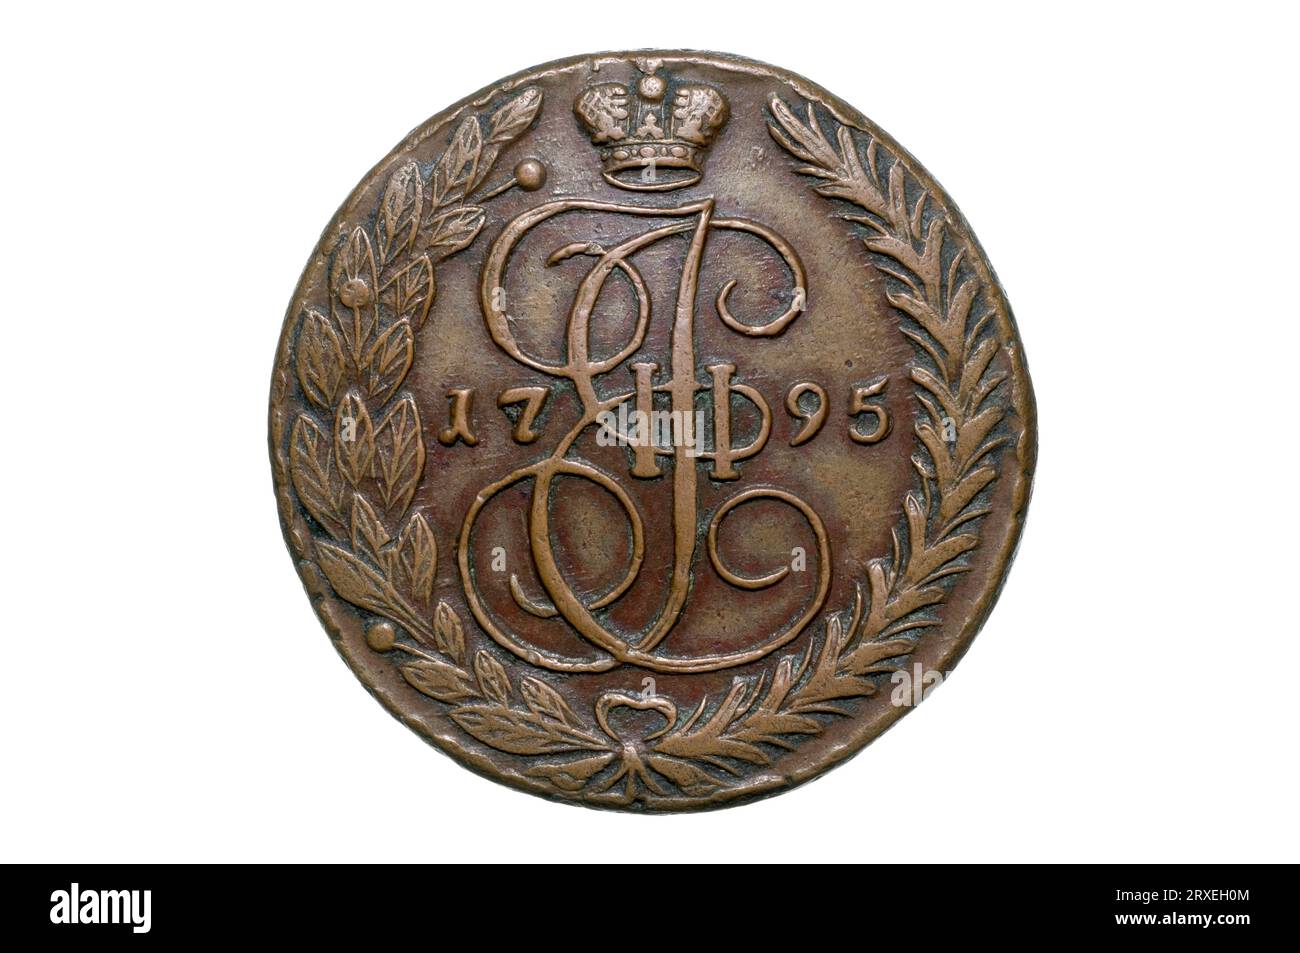 5 Kopek Coin of Catherine II the Great. Stock Photo